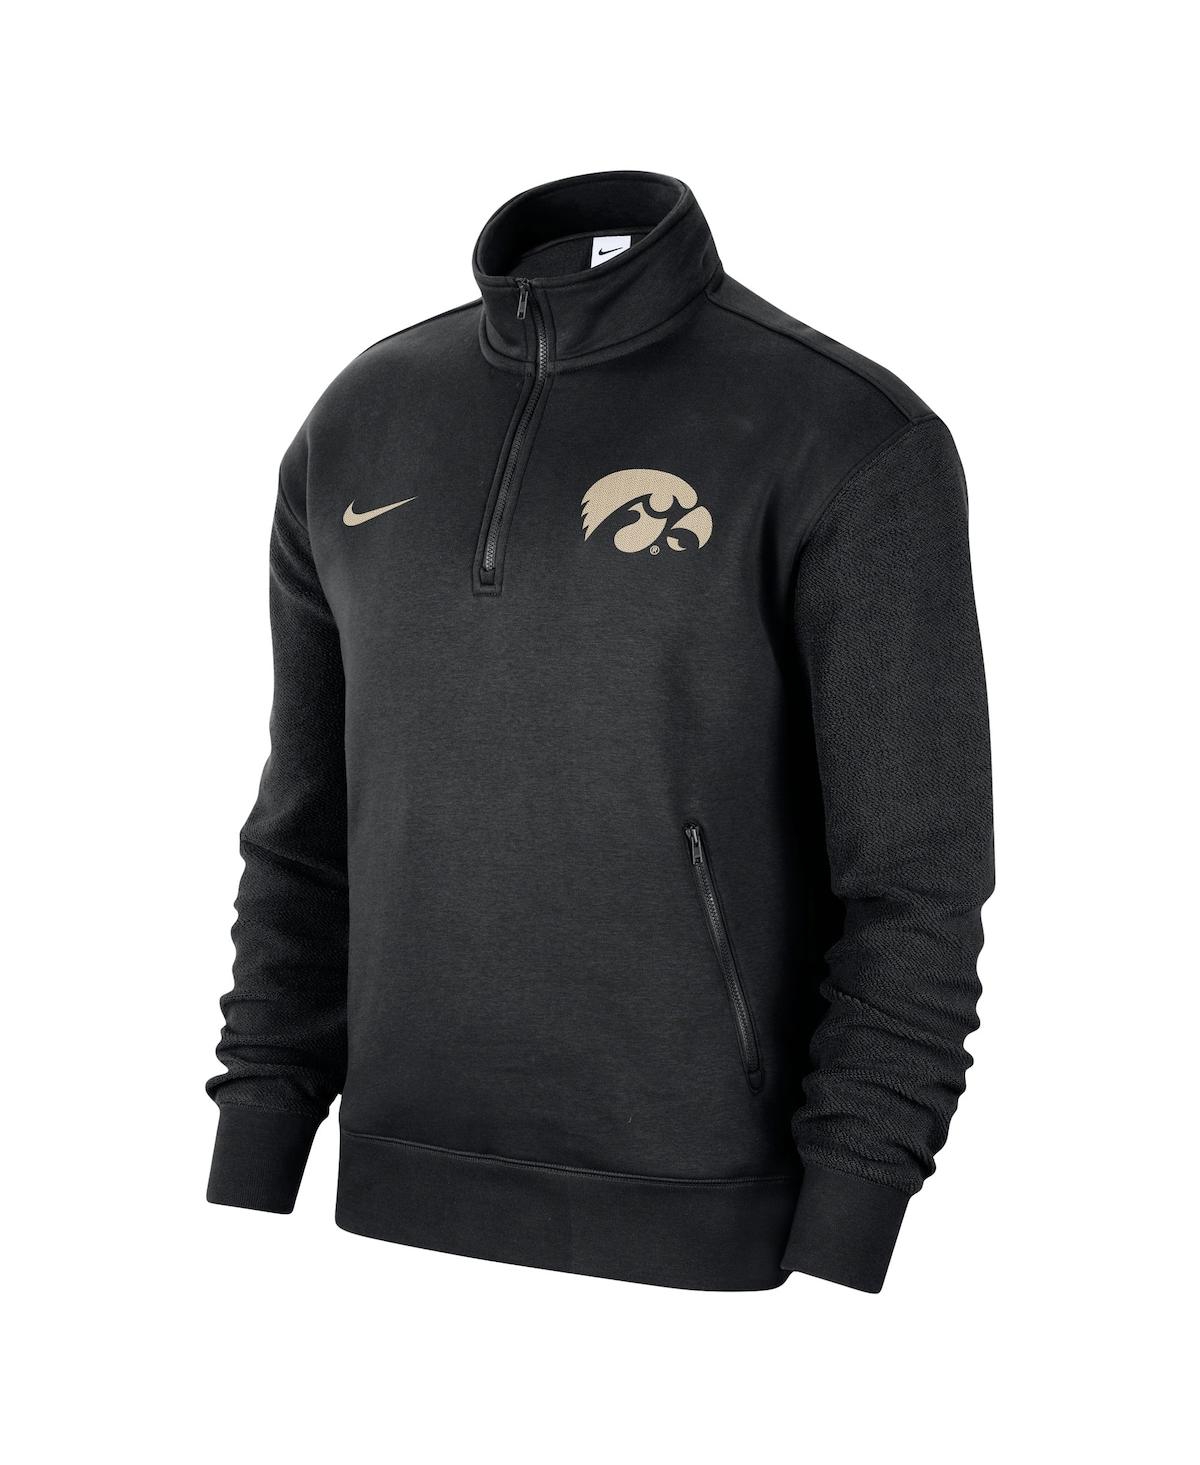 Shop Nike Men's  Black Iowa Hawkeyes Campus Athletic Department Quarter-zip Sweatshirt